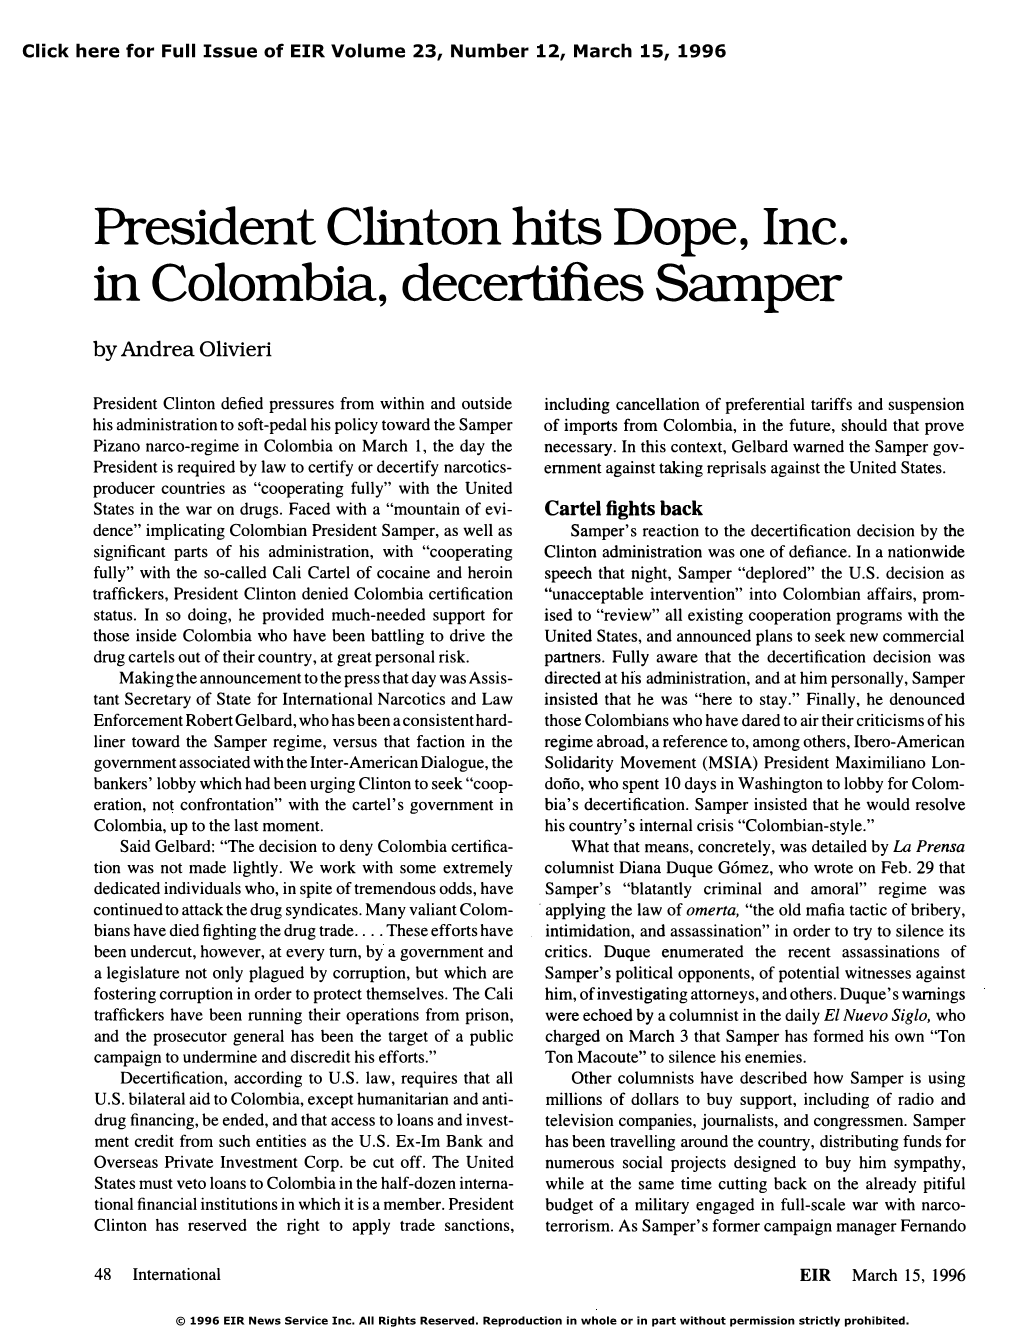 President Clinton Hits Dope, Inc. in Colombia, Decertifies Samper